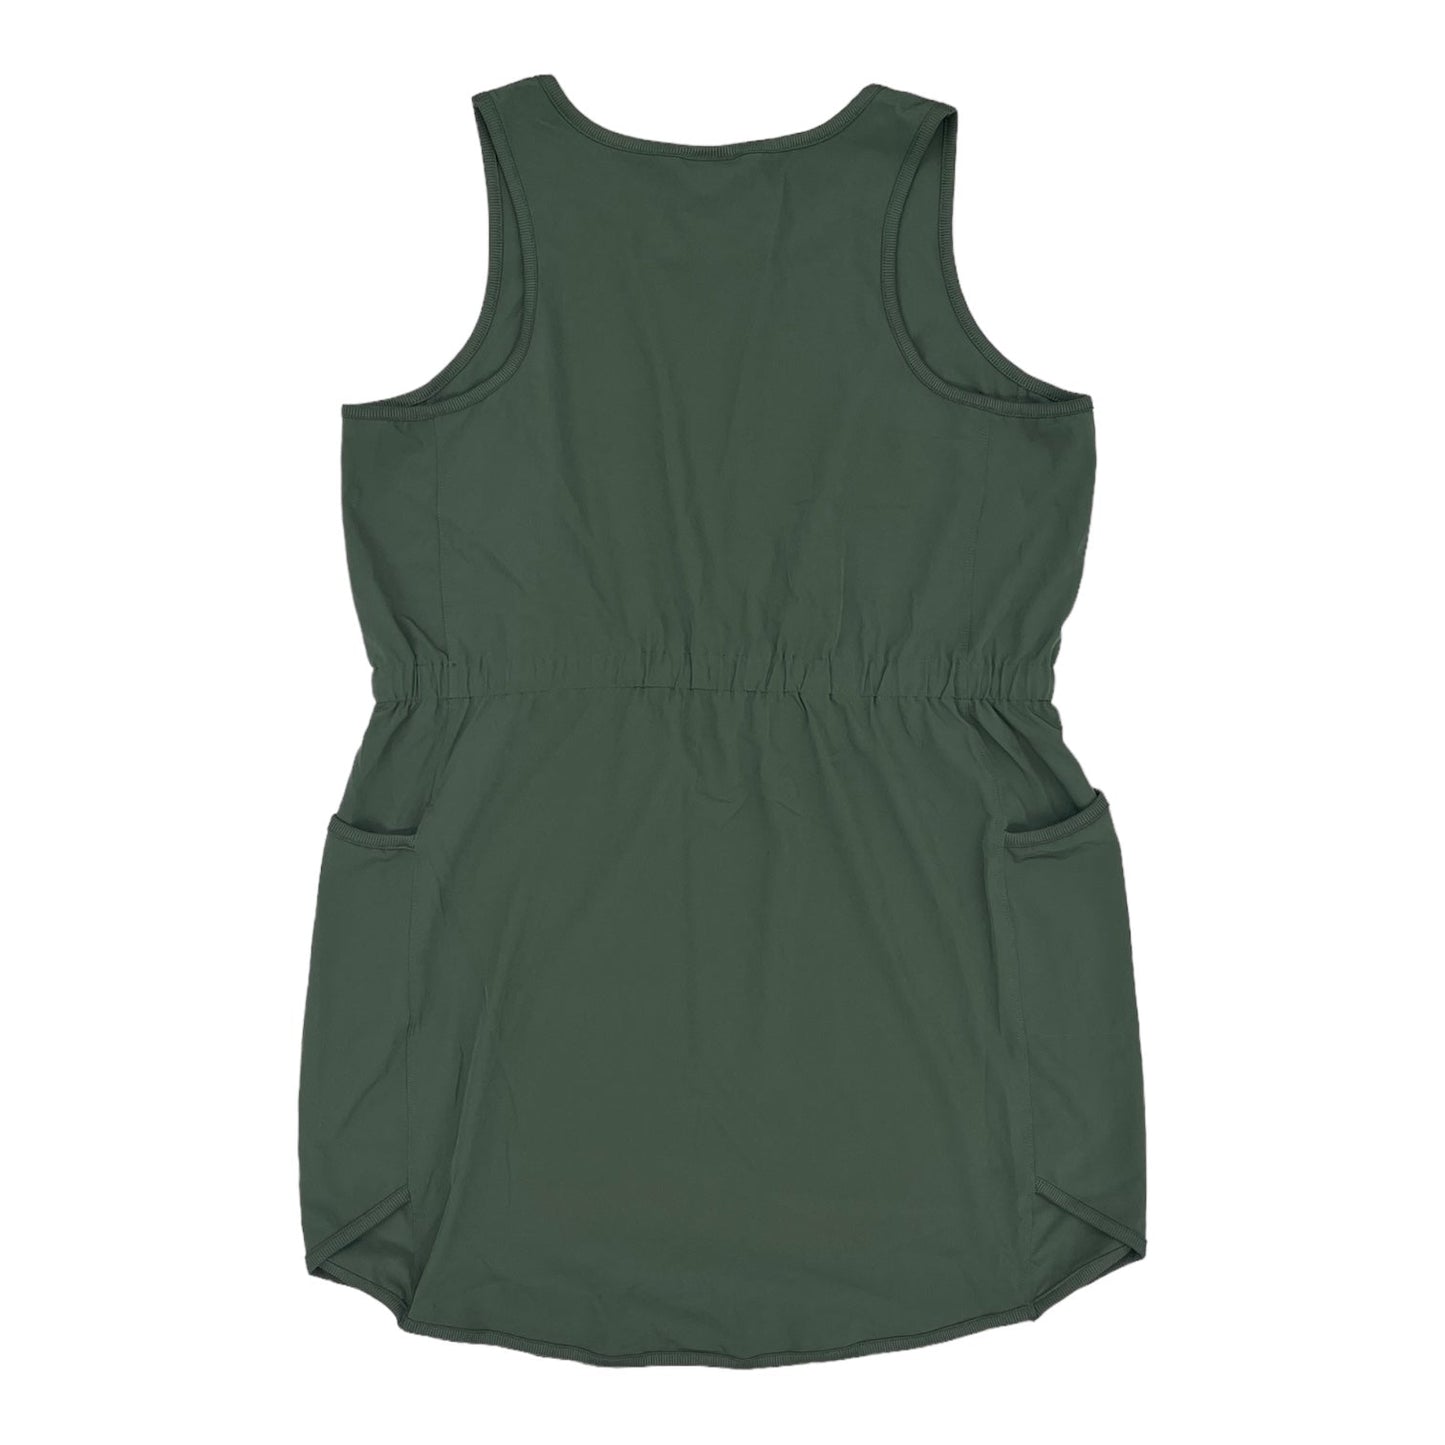 Green Athletic Dress Tek Gear, Size 2x